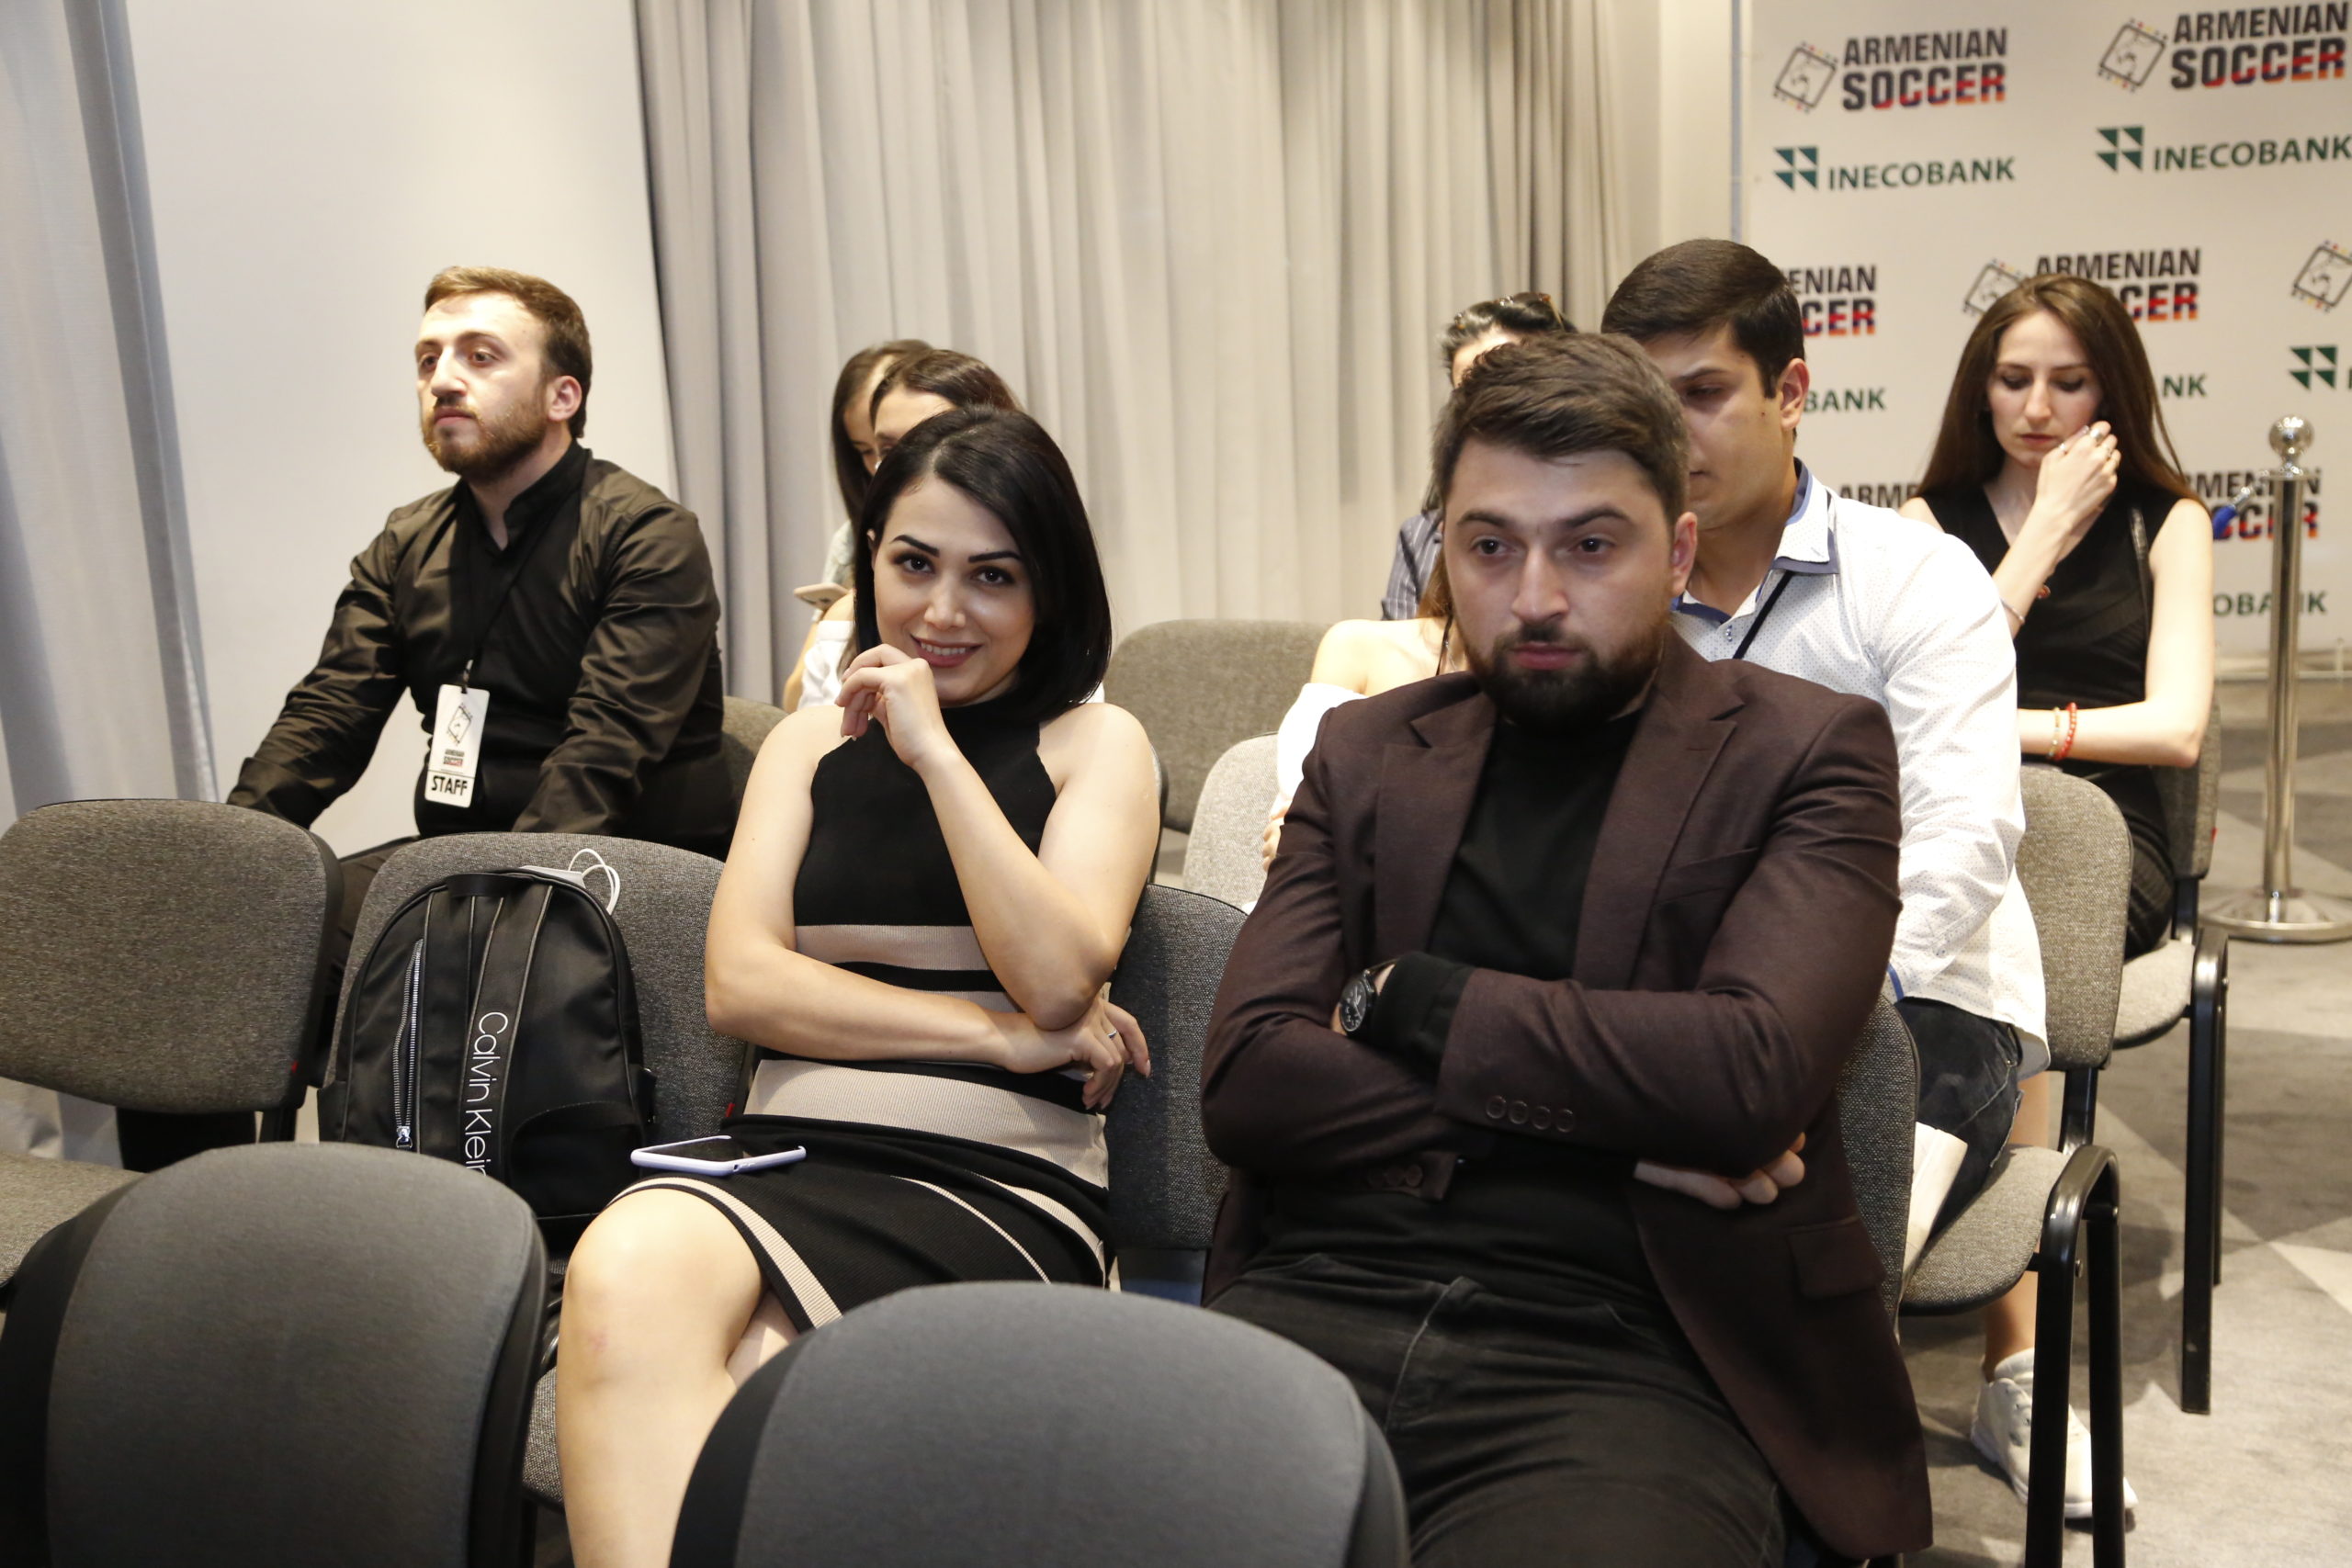 Armenian Soccer Awards - 2020